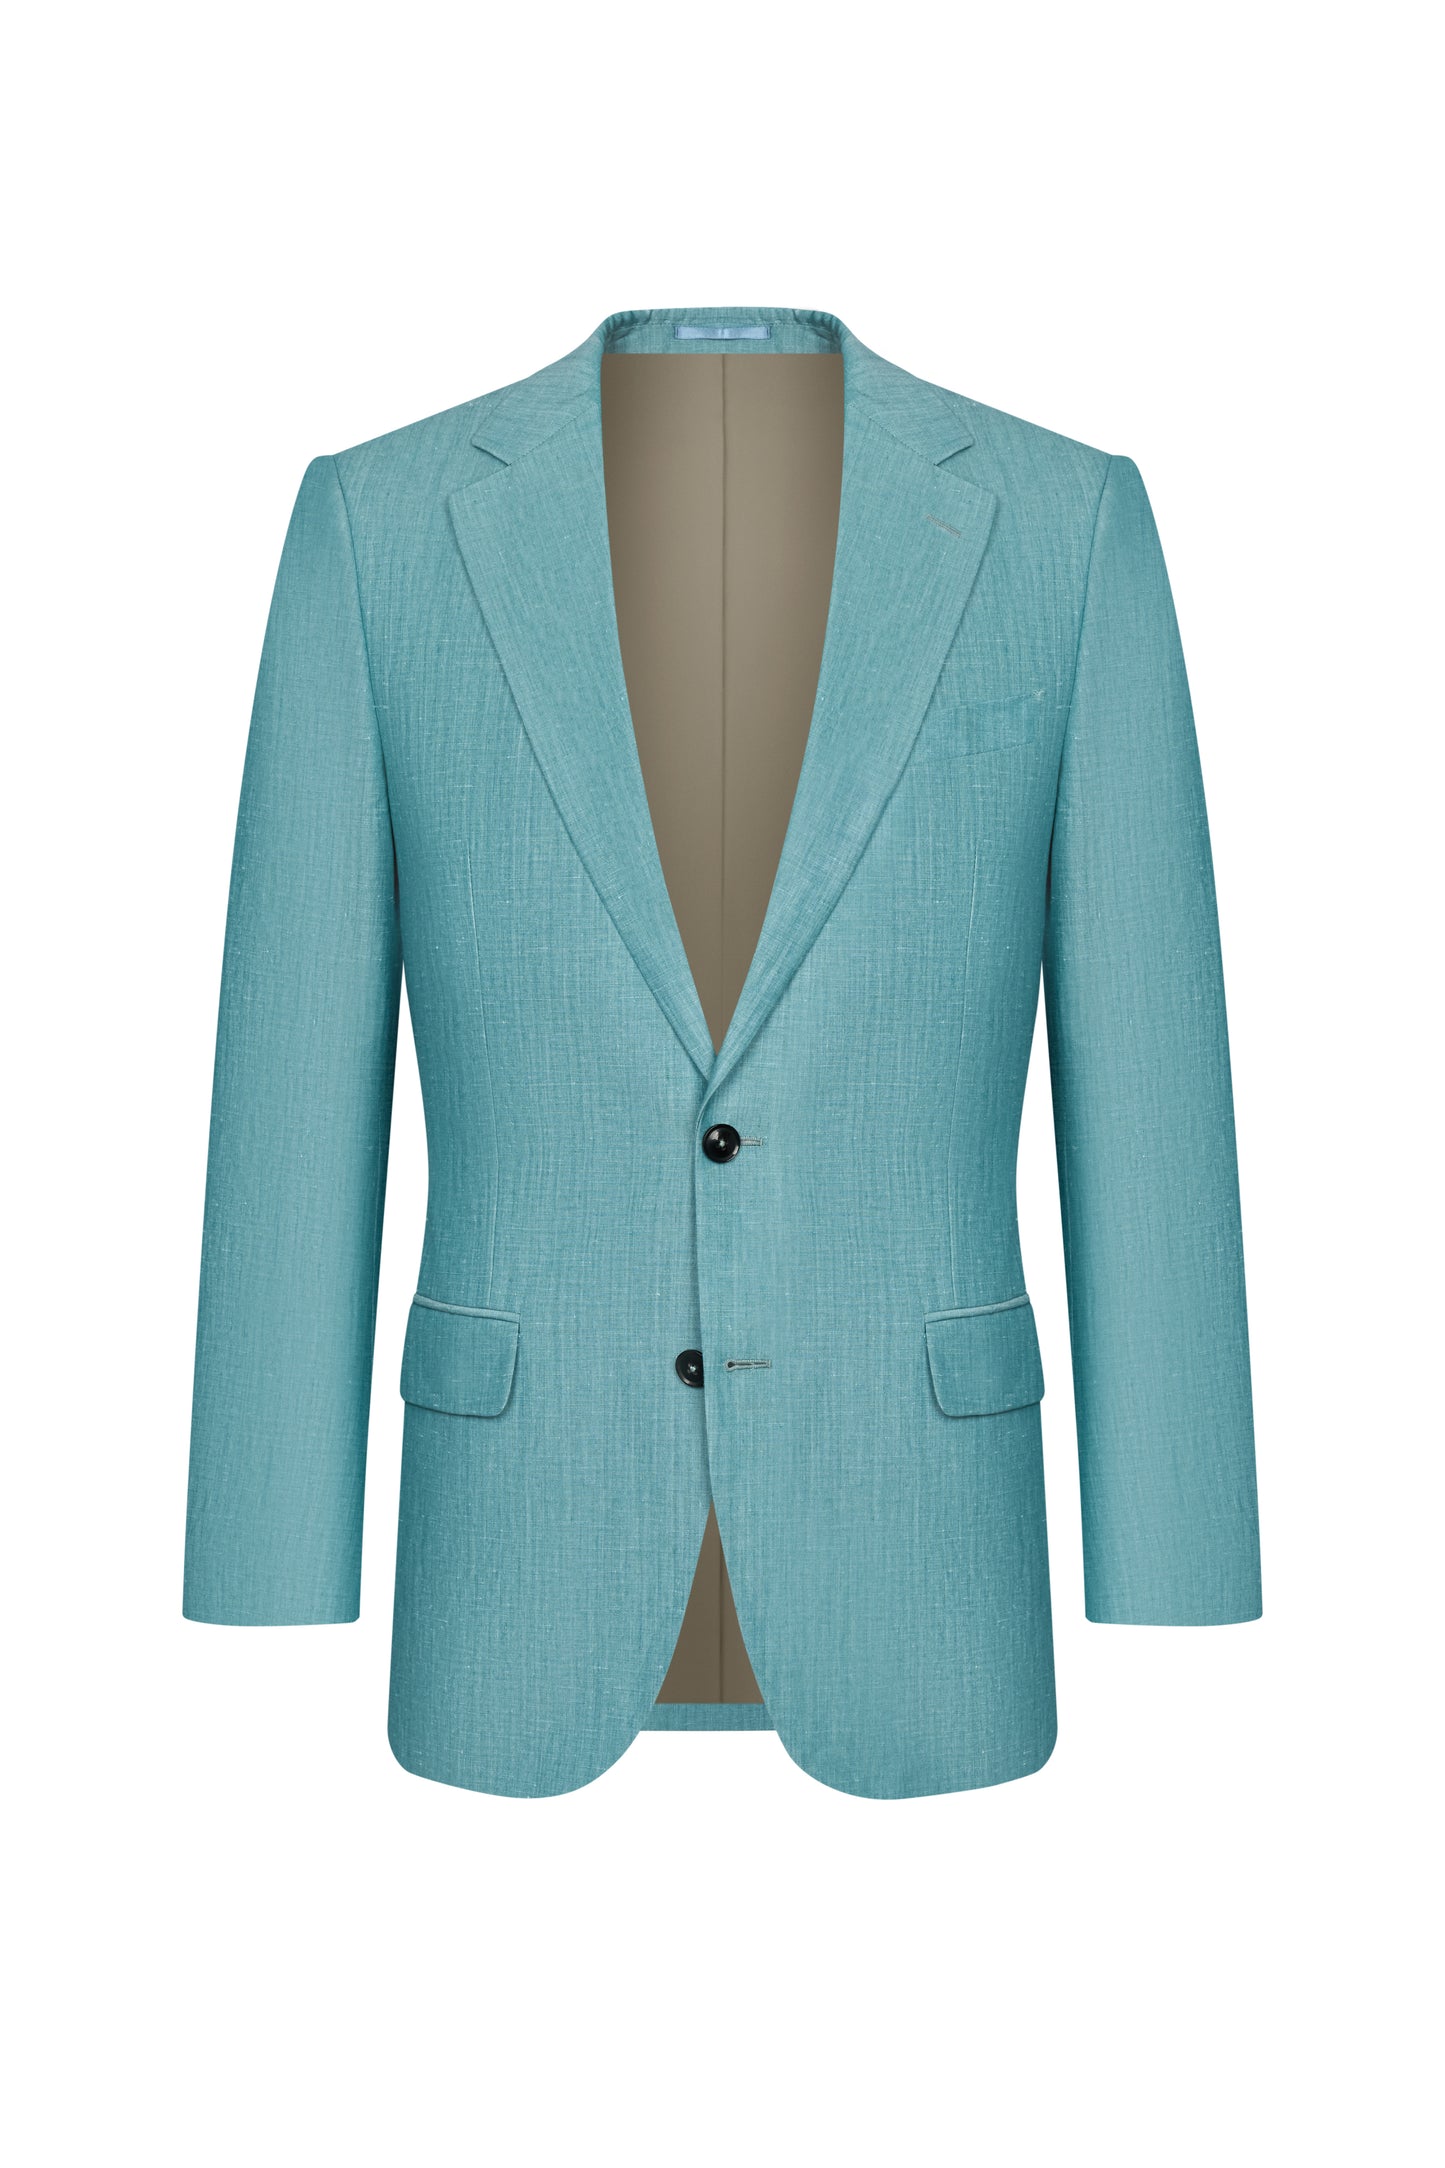 Holland & Sherry Teal Plain Weave Custom Suit